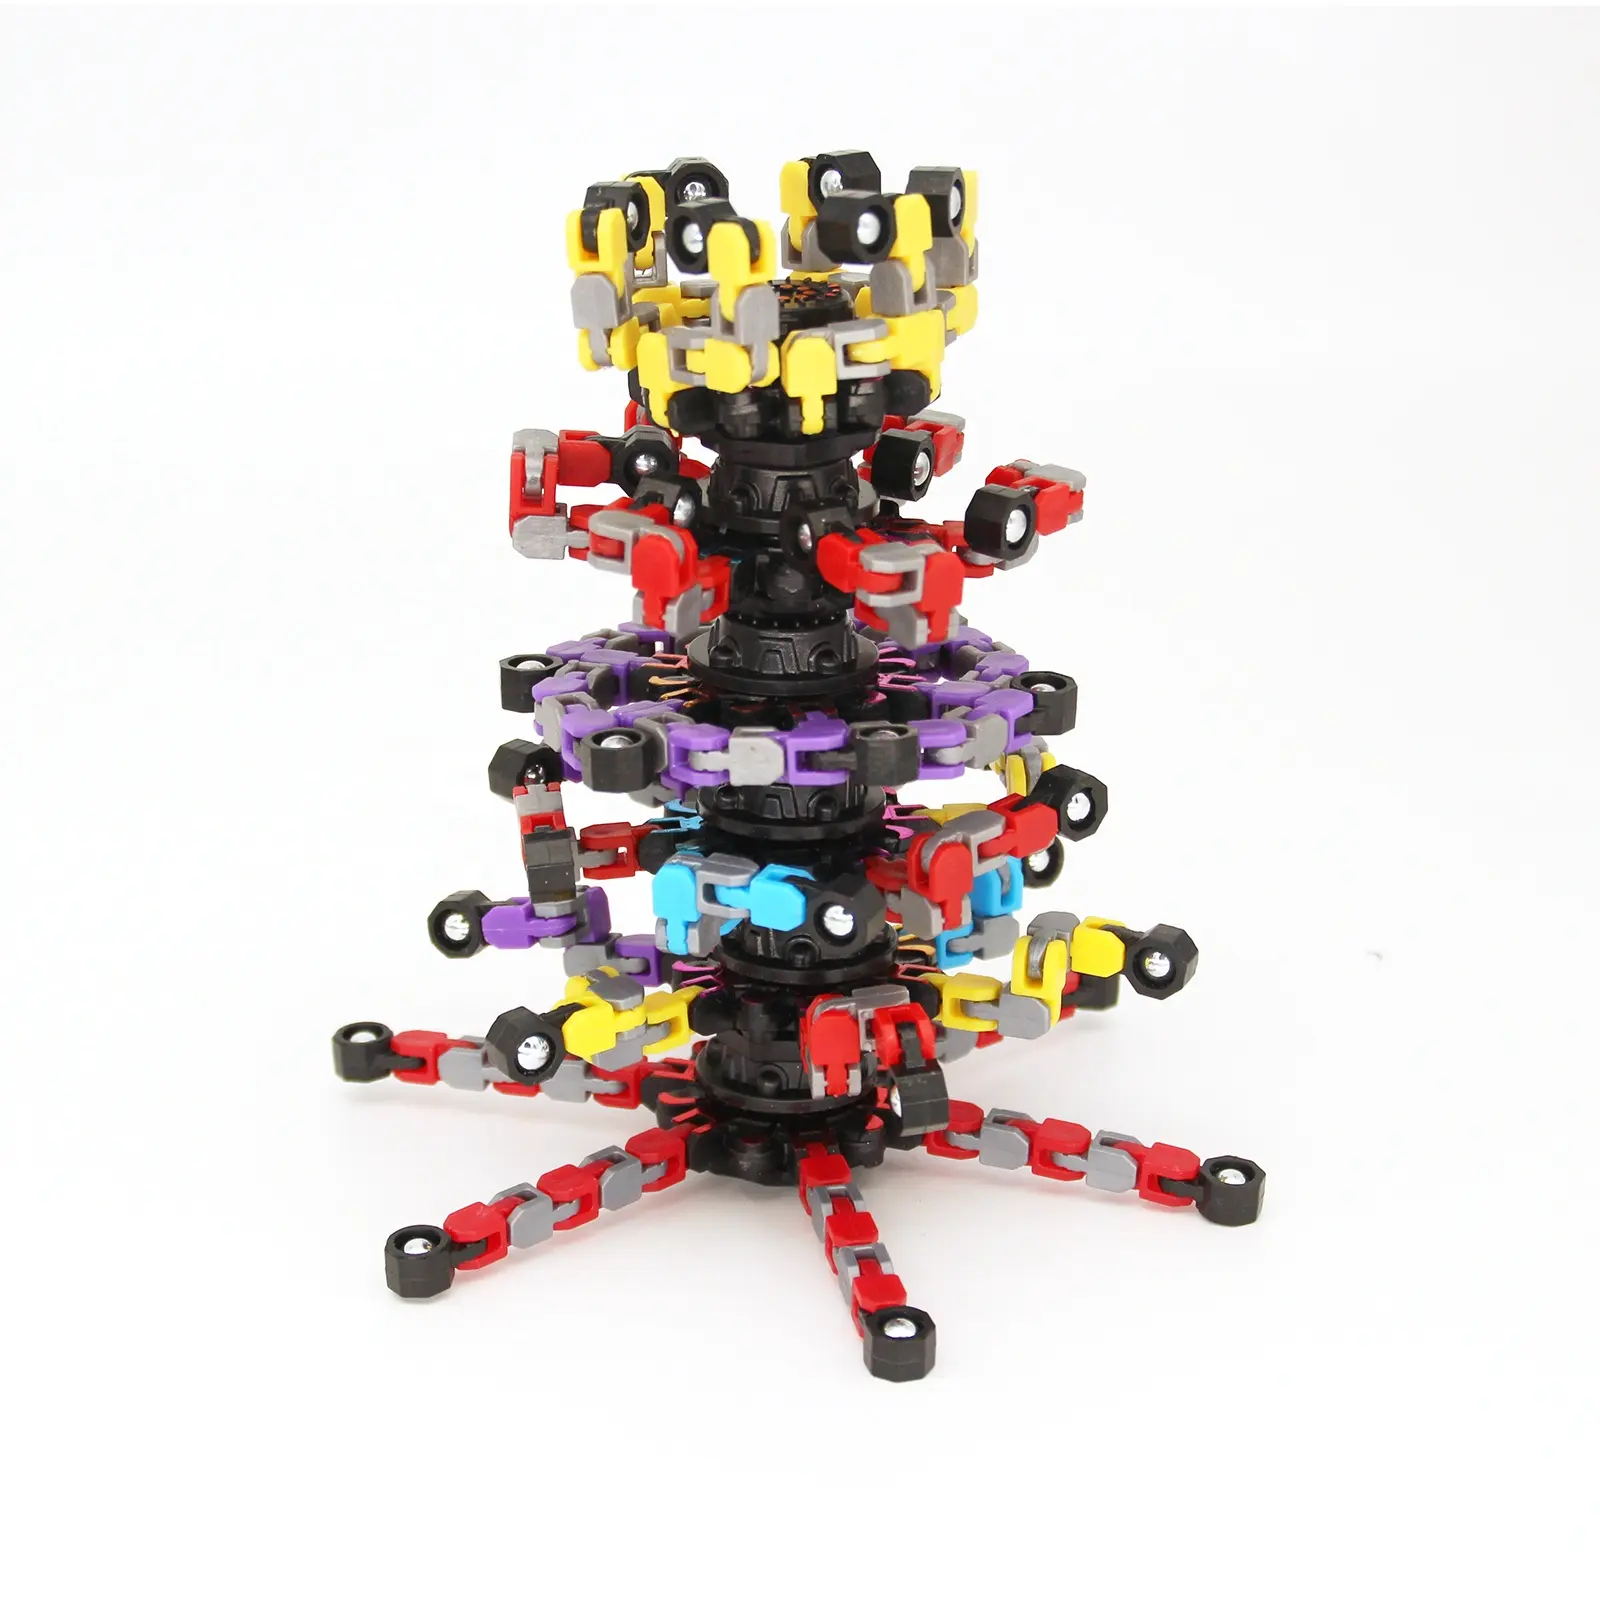 Latest Hot Sale Fingertip Mechanical Decompression Chain Deformation Robot Gyro Toy Fidget Spinner Transformable Fidget